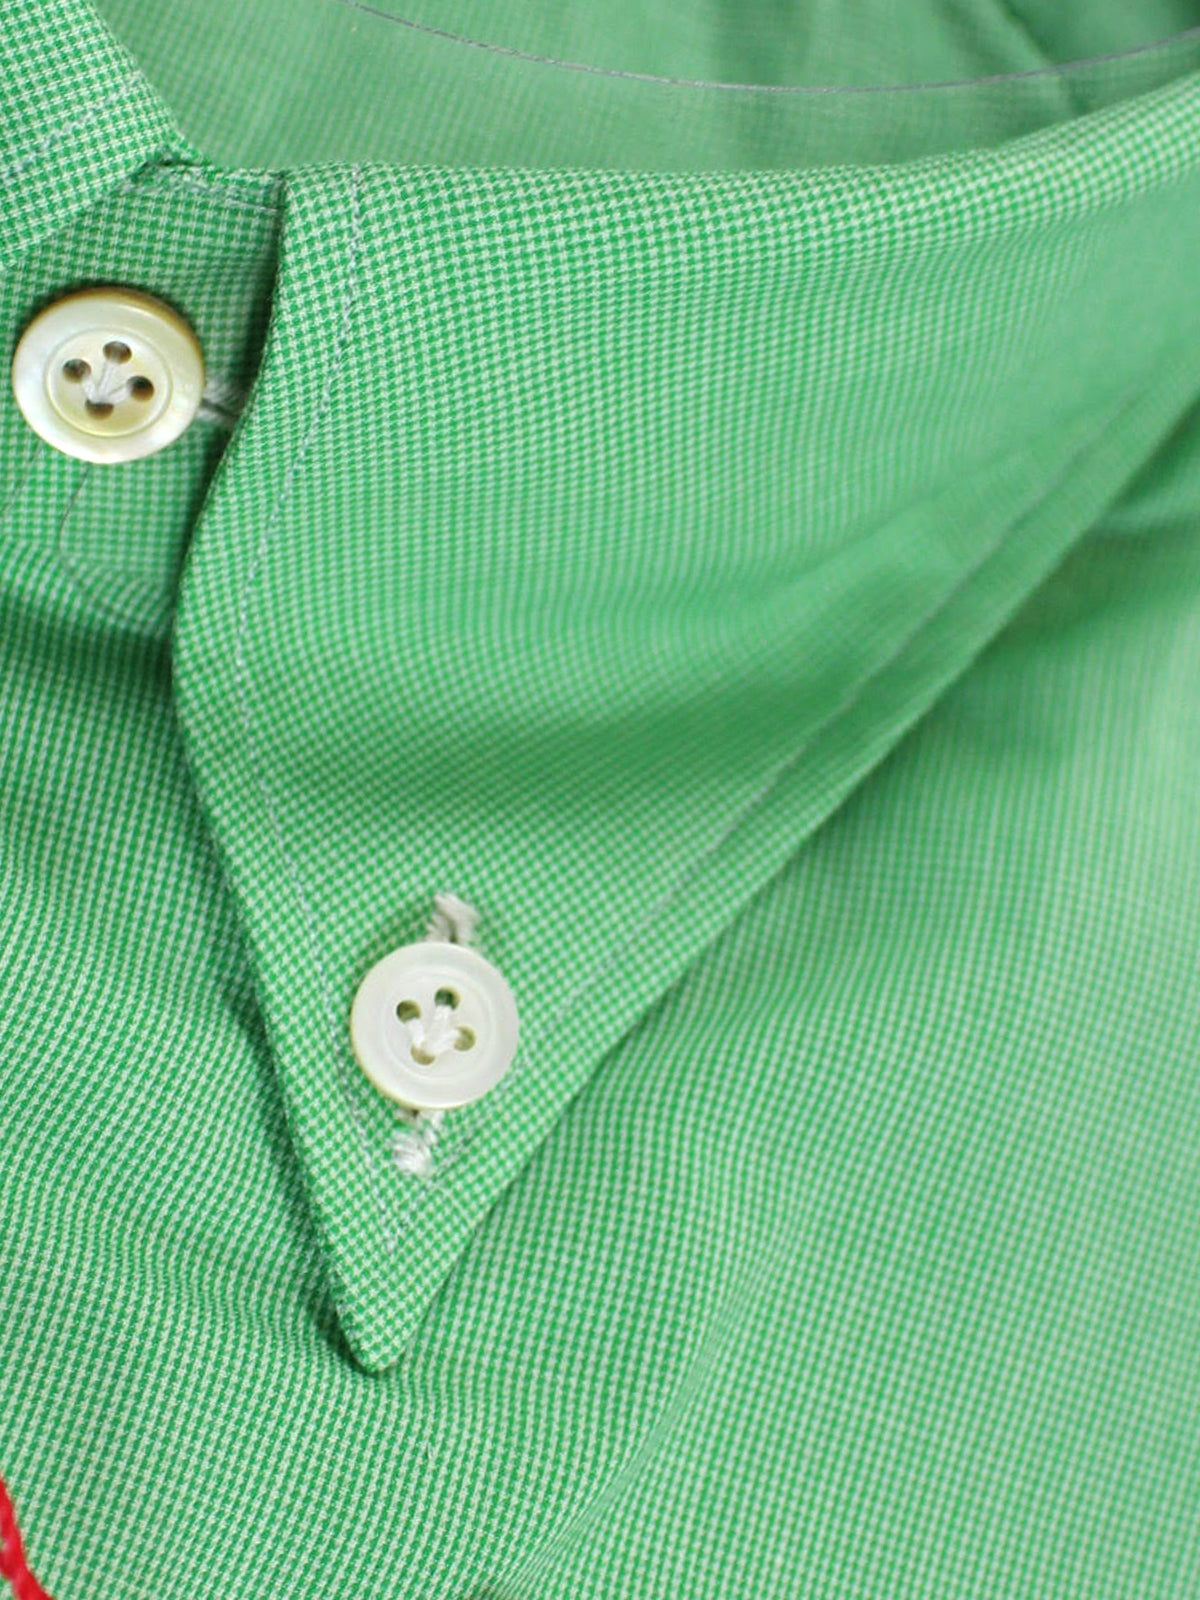 Kiton Dress Shirt Royal Green Solid Button Collar